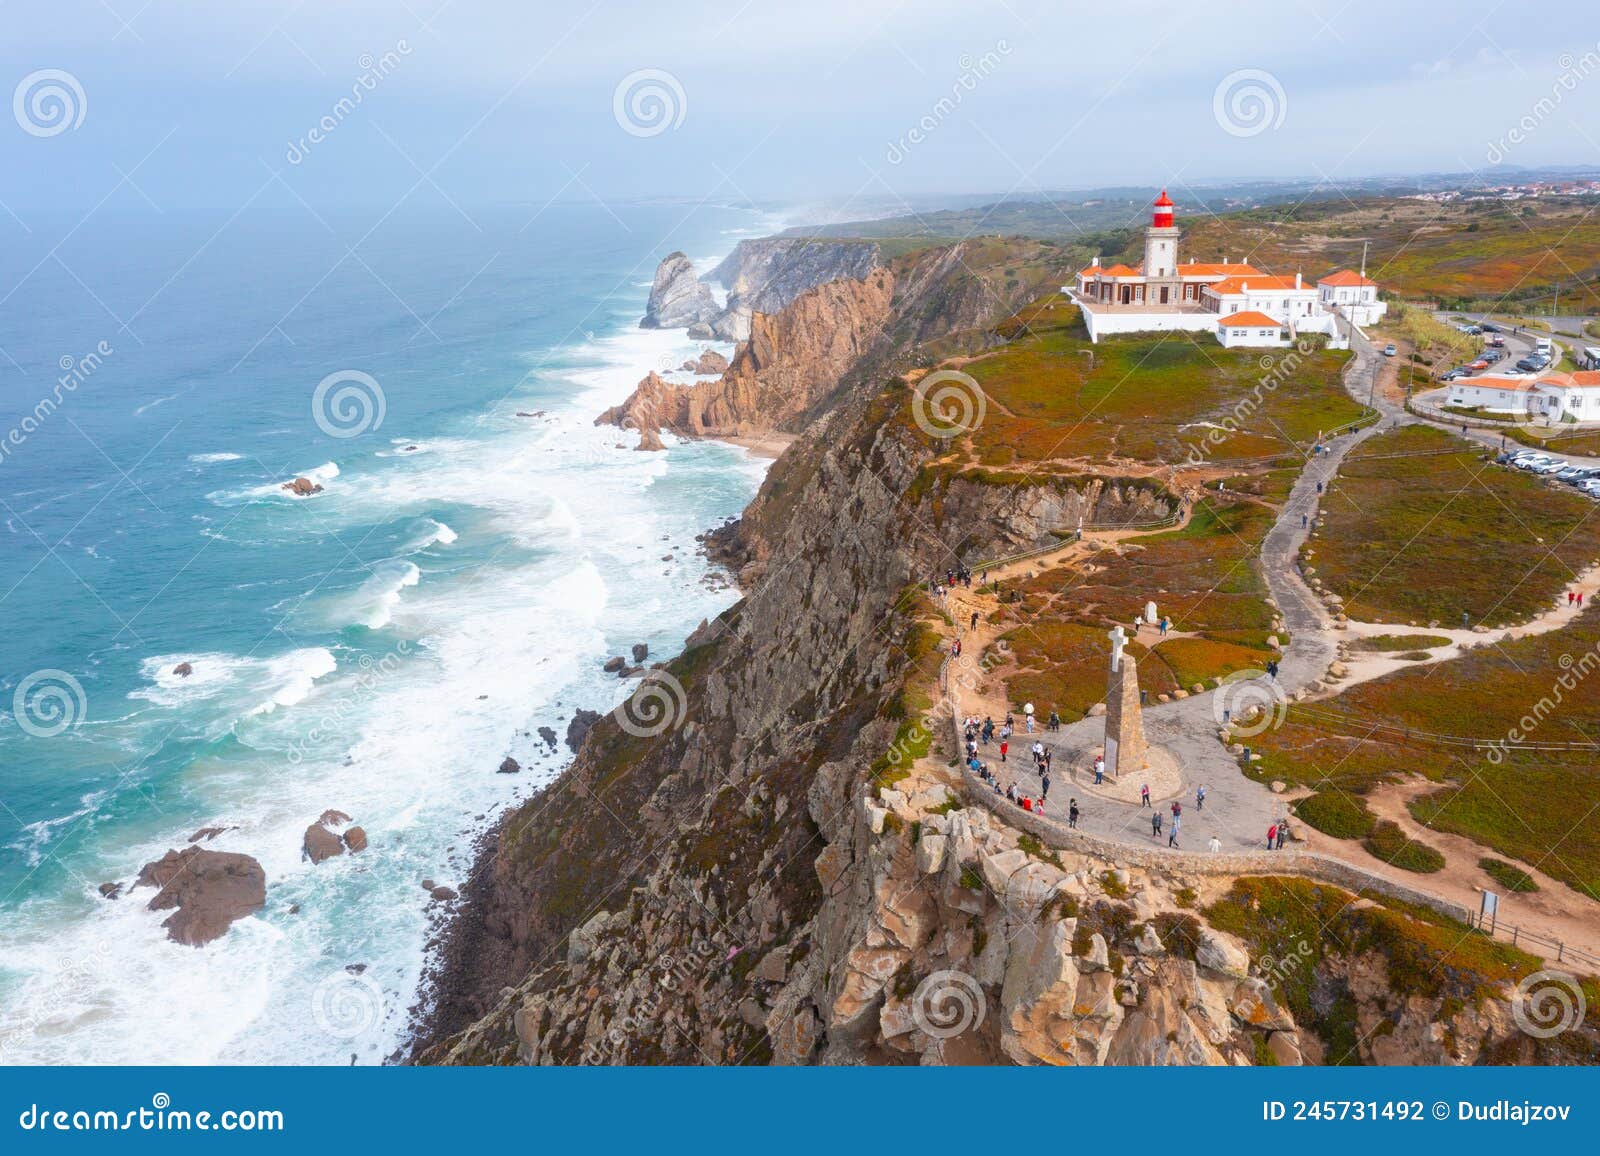 cabo da roca lighthouse in portugal